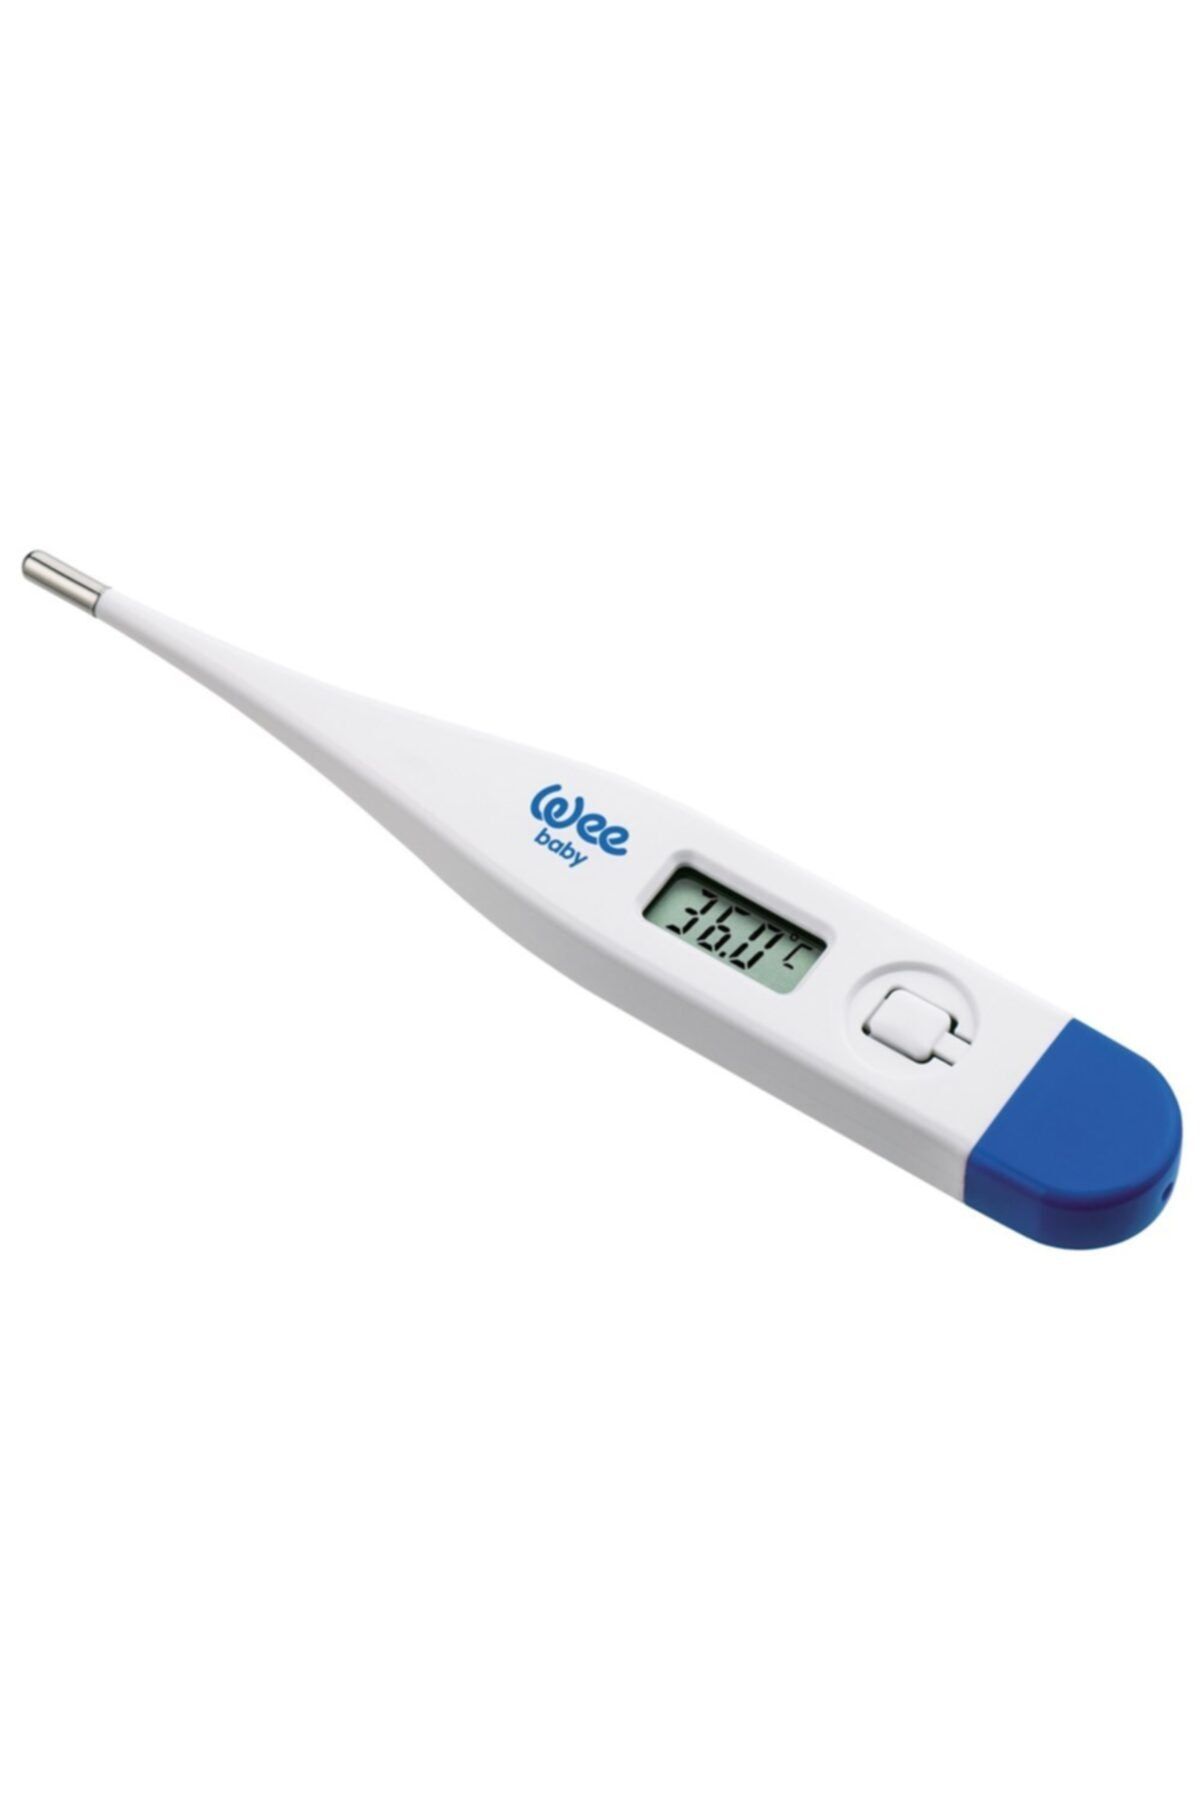 Wee Baby Dijital Termometre 301